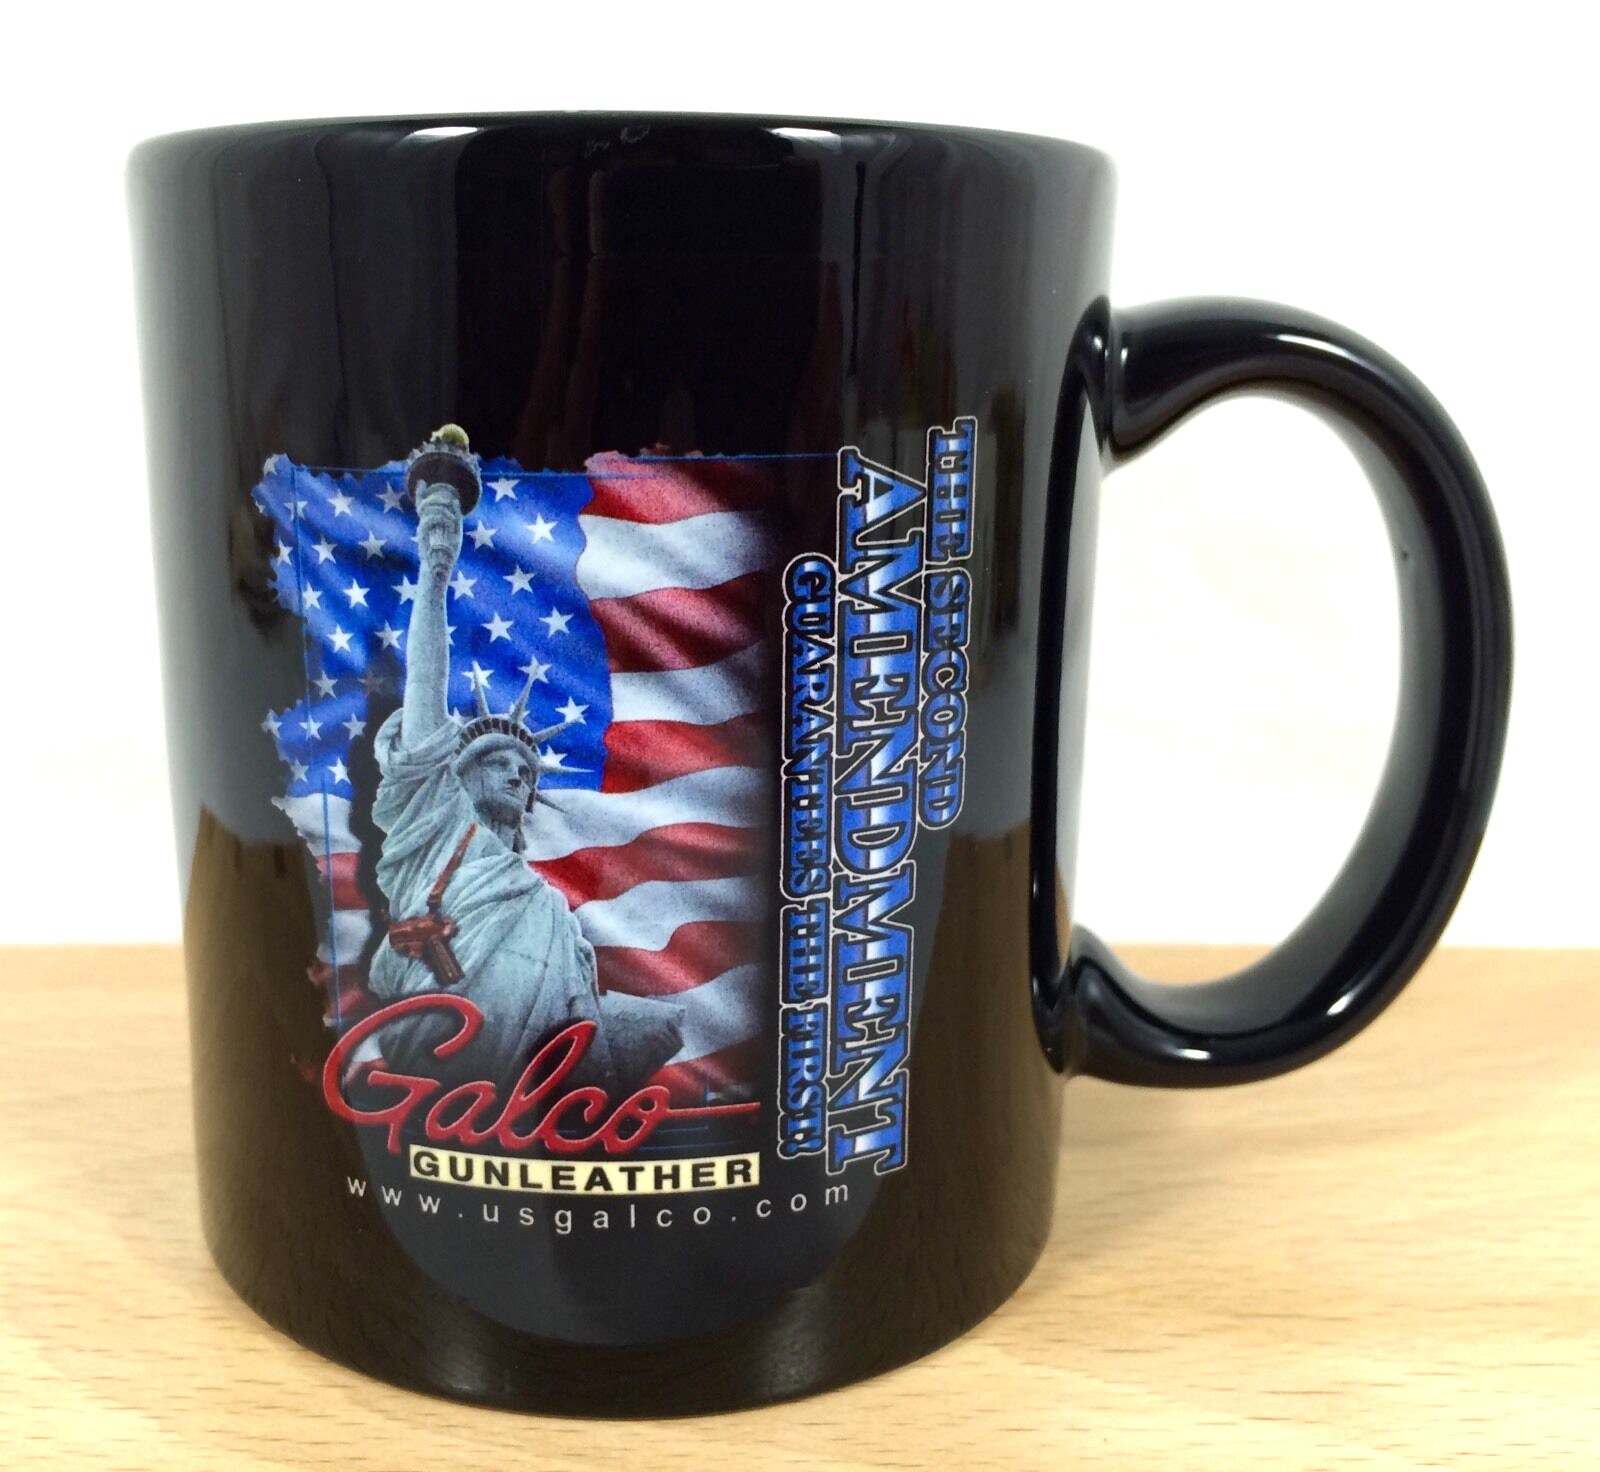 Galco GUN LEATHER 2nd Amendment Guarantee the 1st Rights USA Flag Ceramic MUG